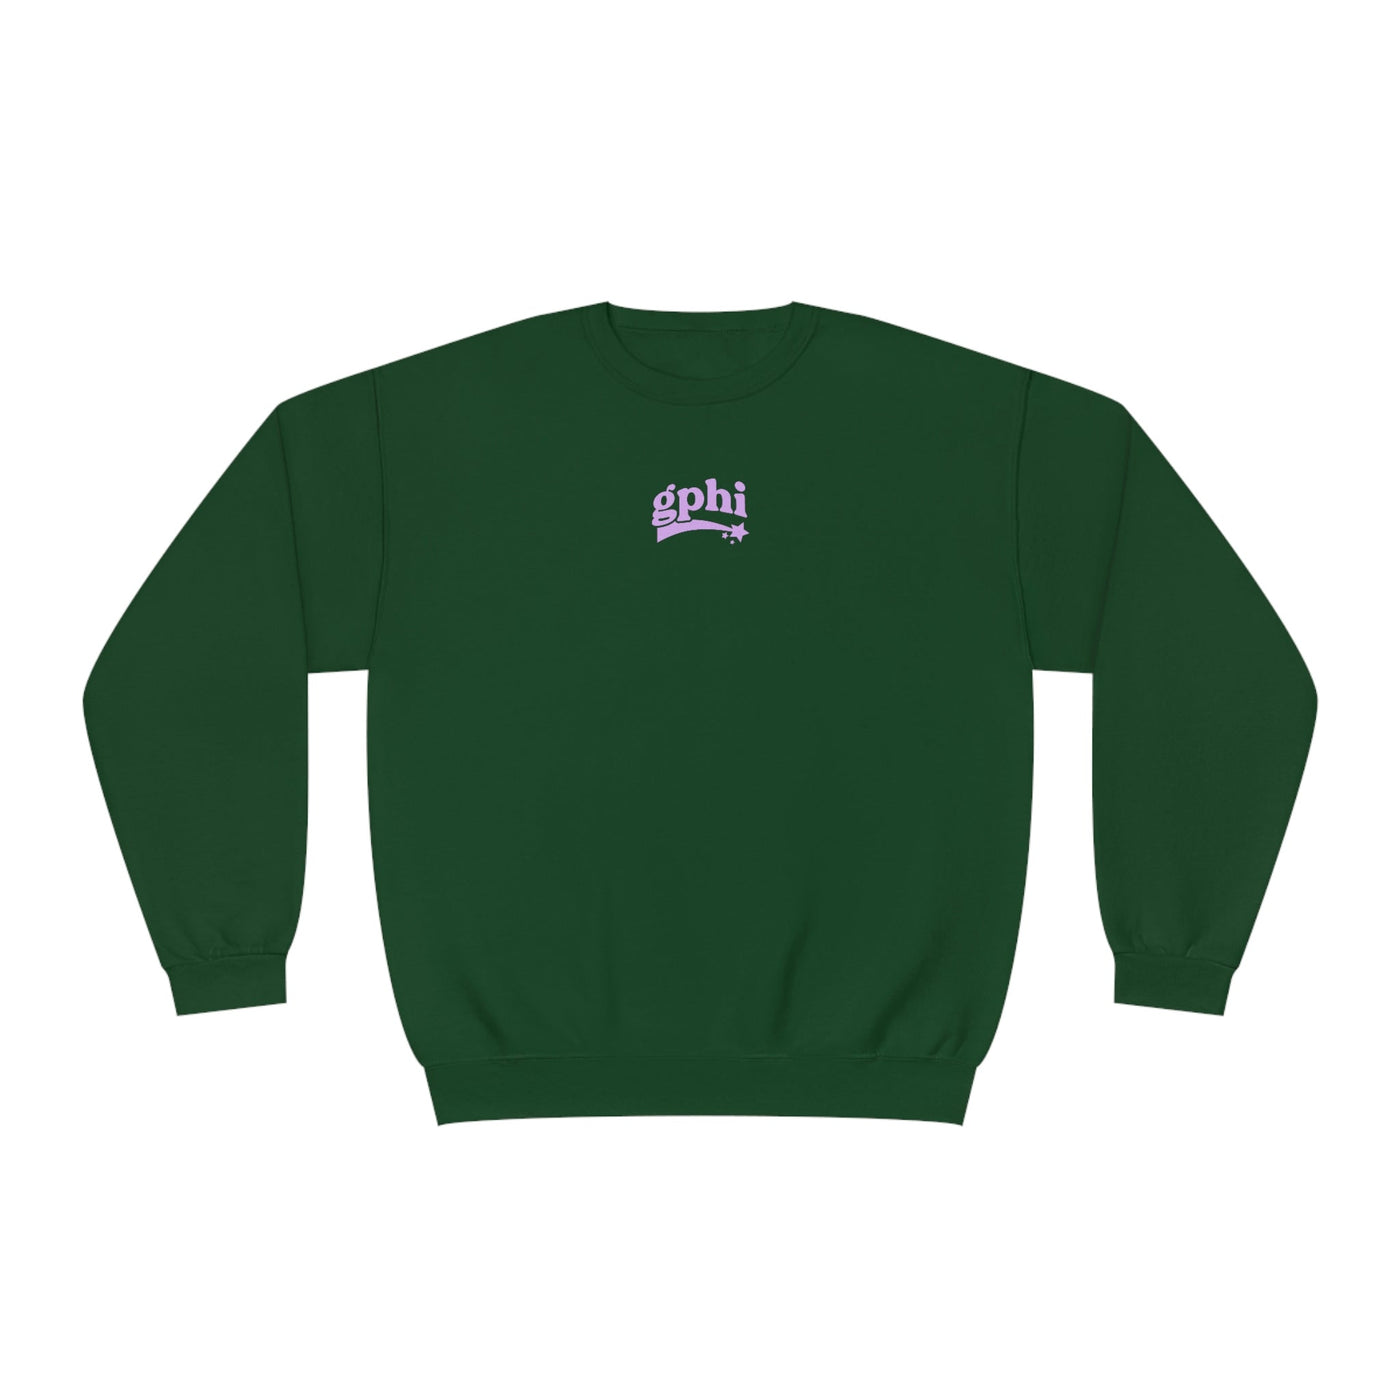 Gamma Phi Beta Crewneck Sweatshirt | Be Kind to the Planet Trendy Sorority Crewneck